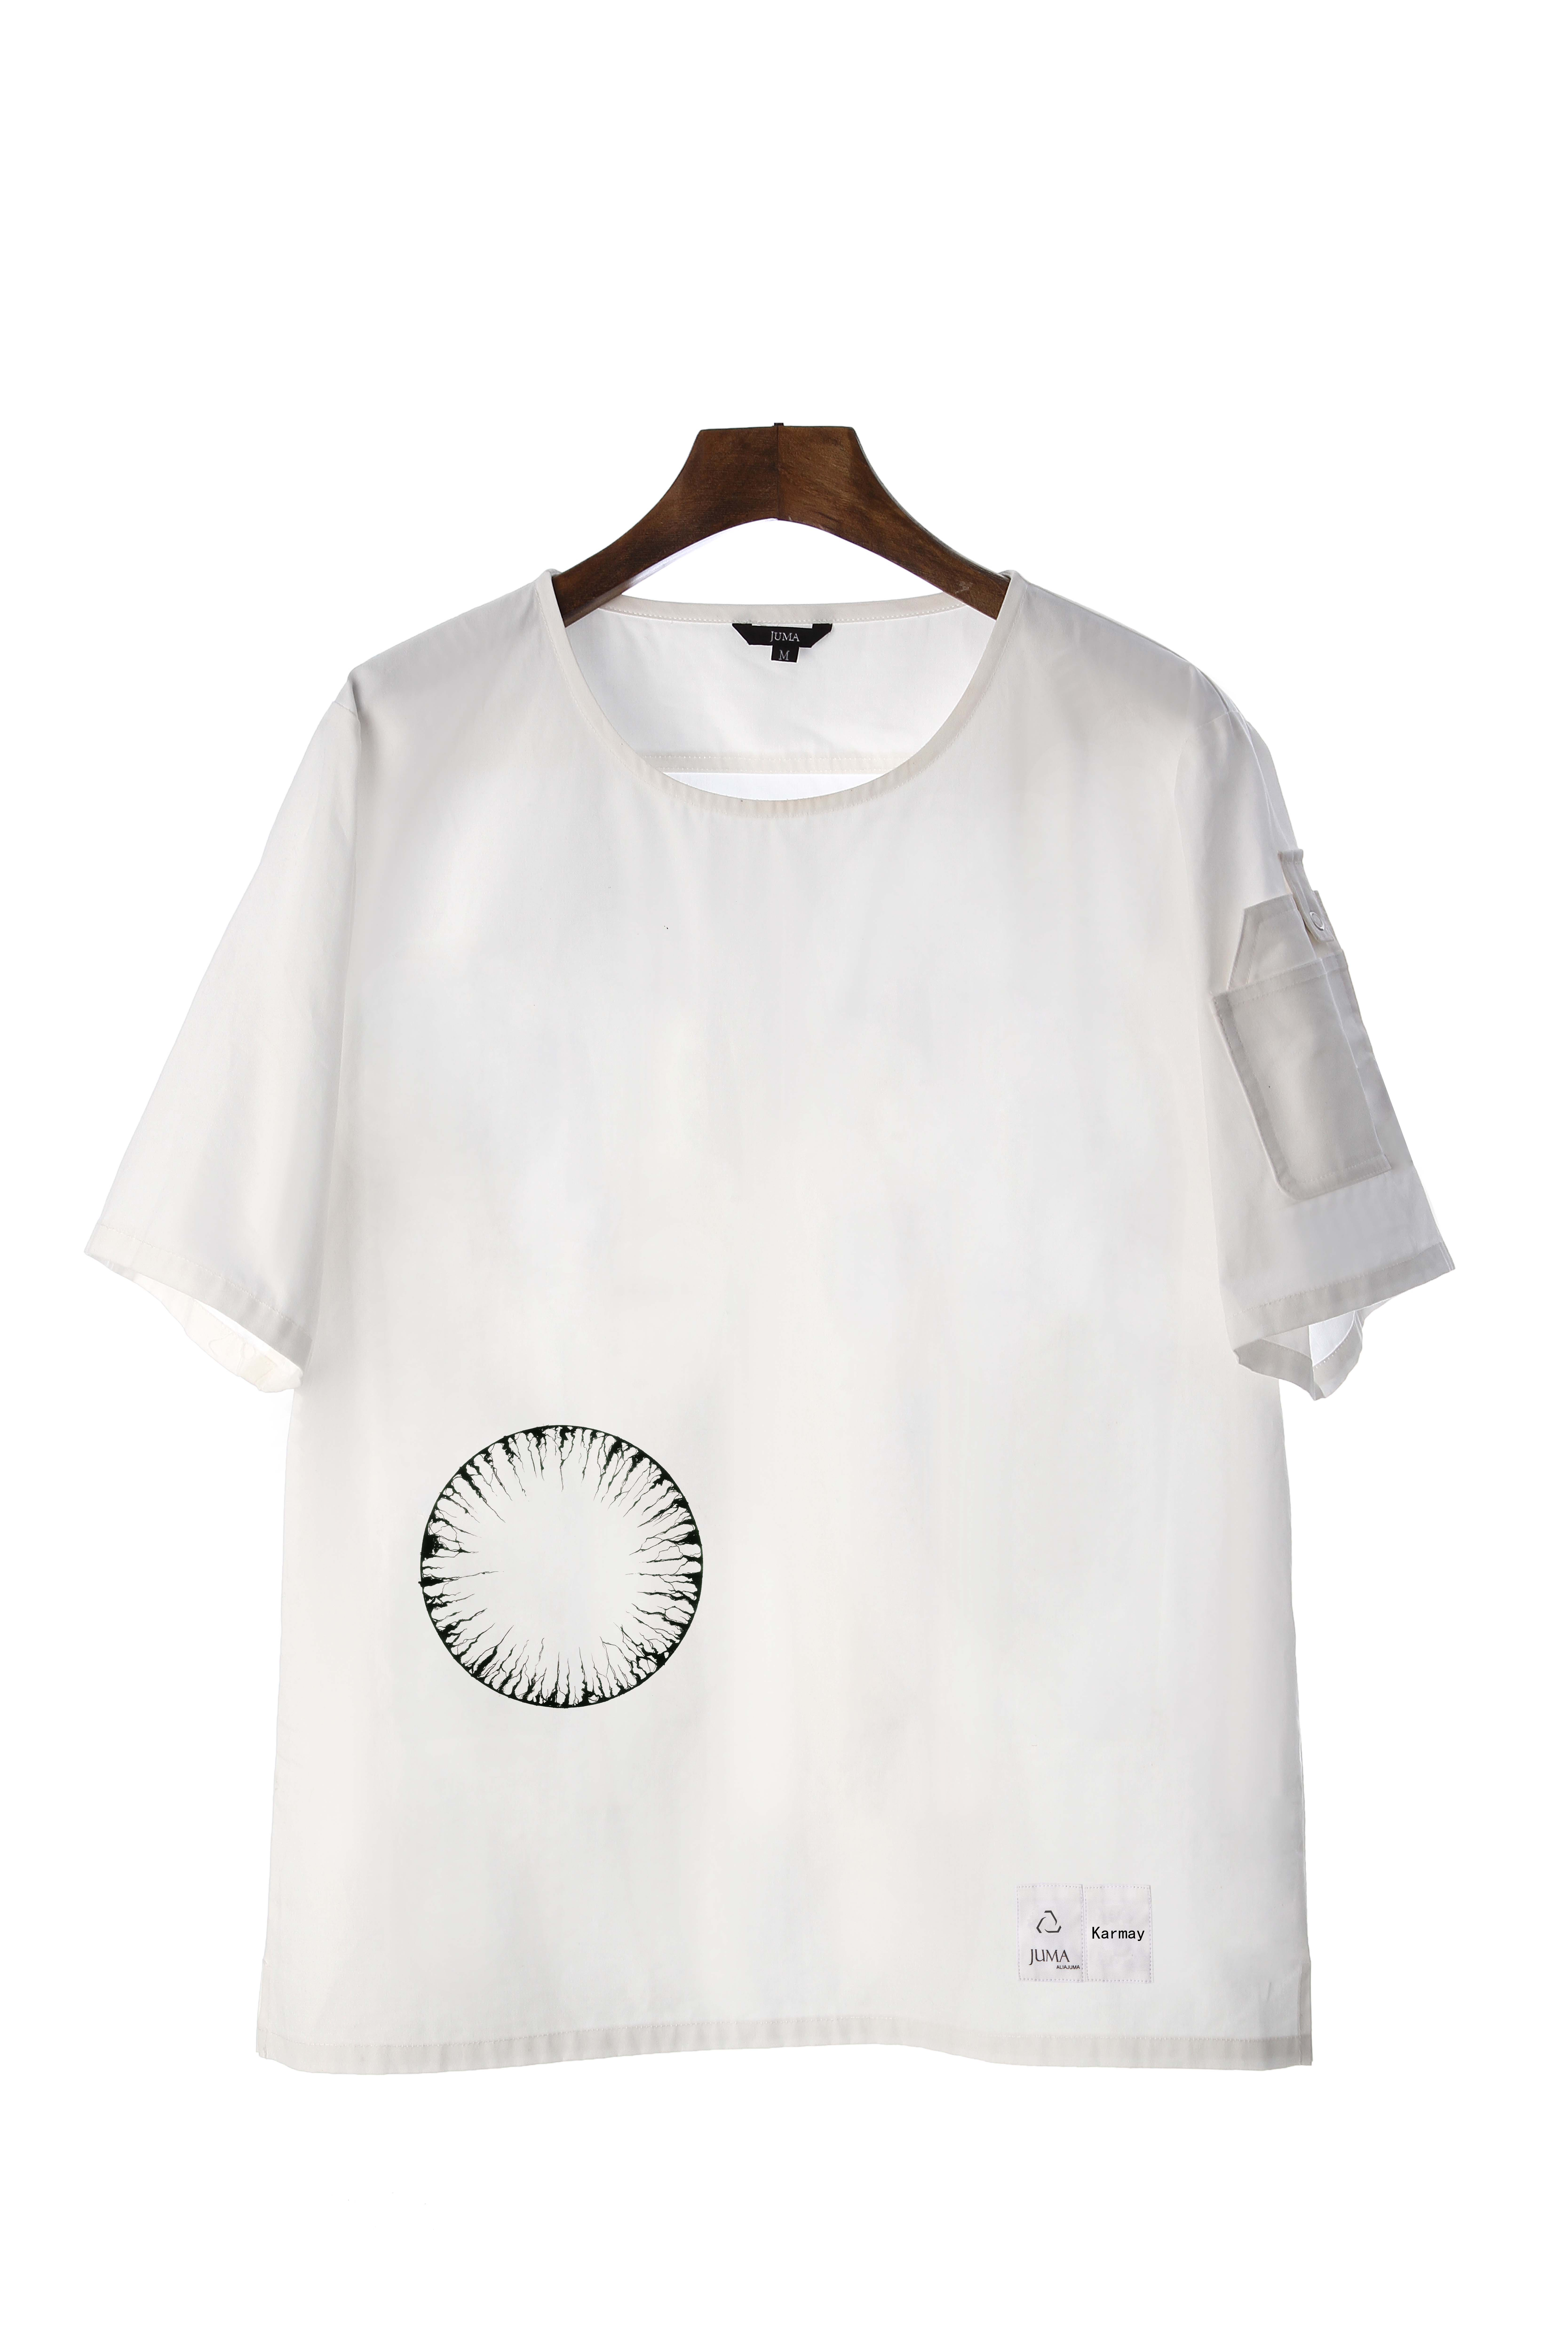 Z+B 印花短袖衬衫 - 4 个再生水瓶 - 黑色｜Z+B Printed Short Sleeve Shirt - 4 Recycled Water Bottles - Black